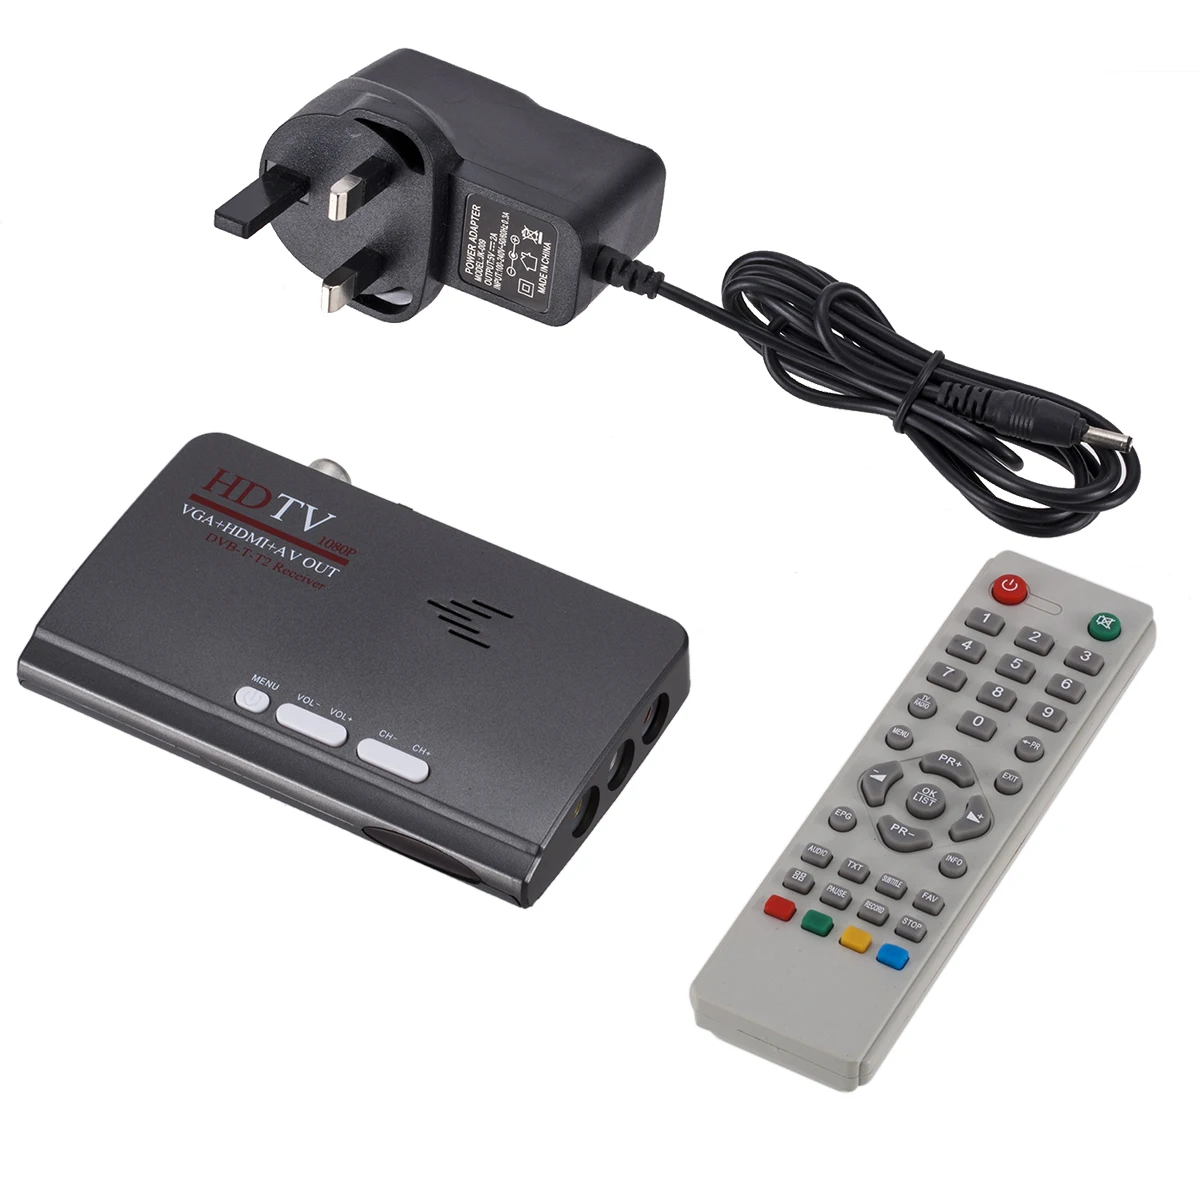 HD tv DVB-T/DVB-T2 ТВ приставка цифровая наземная 1080P HDTV тюнер спутниковый ресивер HDMI/VGA/AV для lcd/CRT ПК монитора